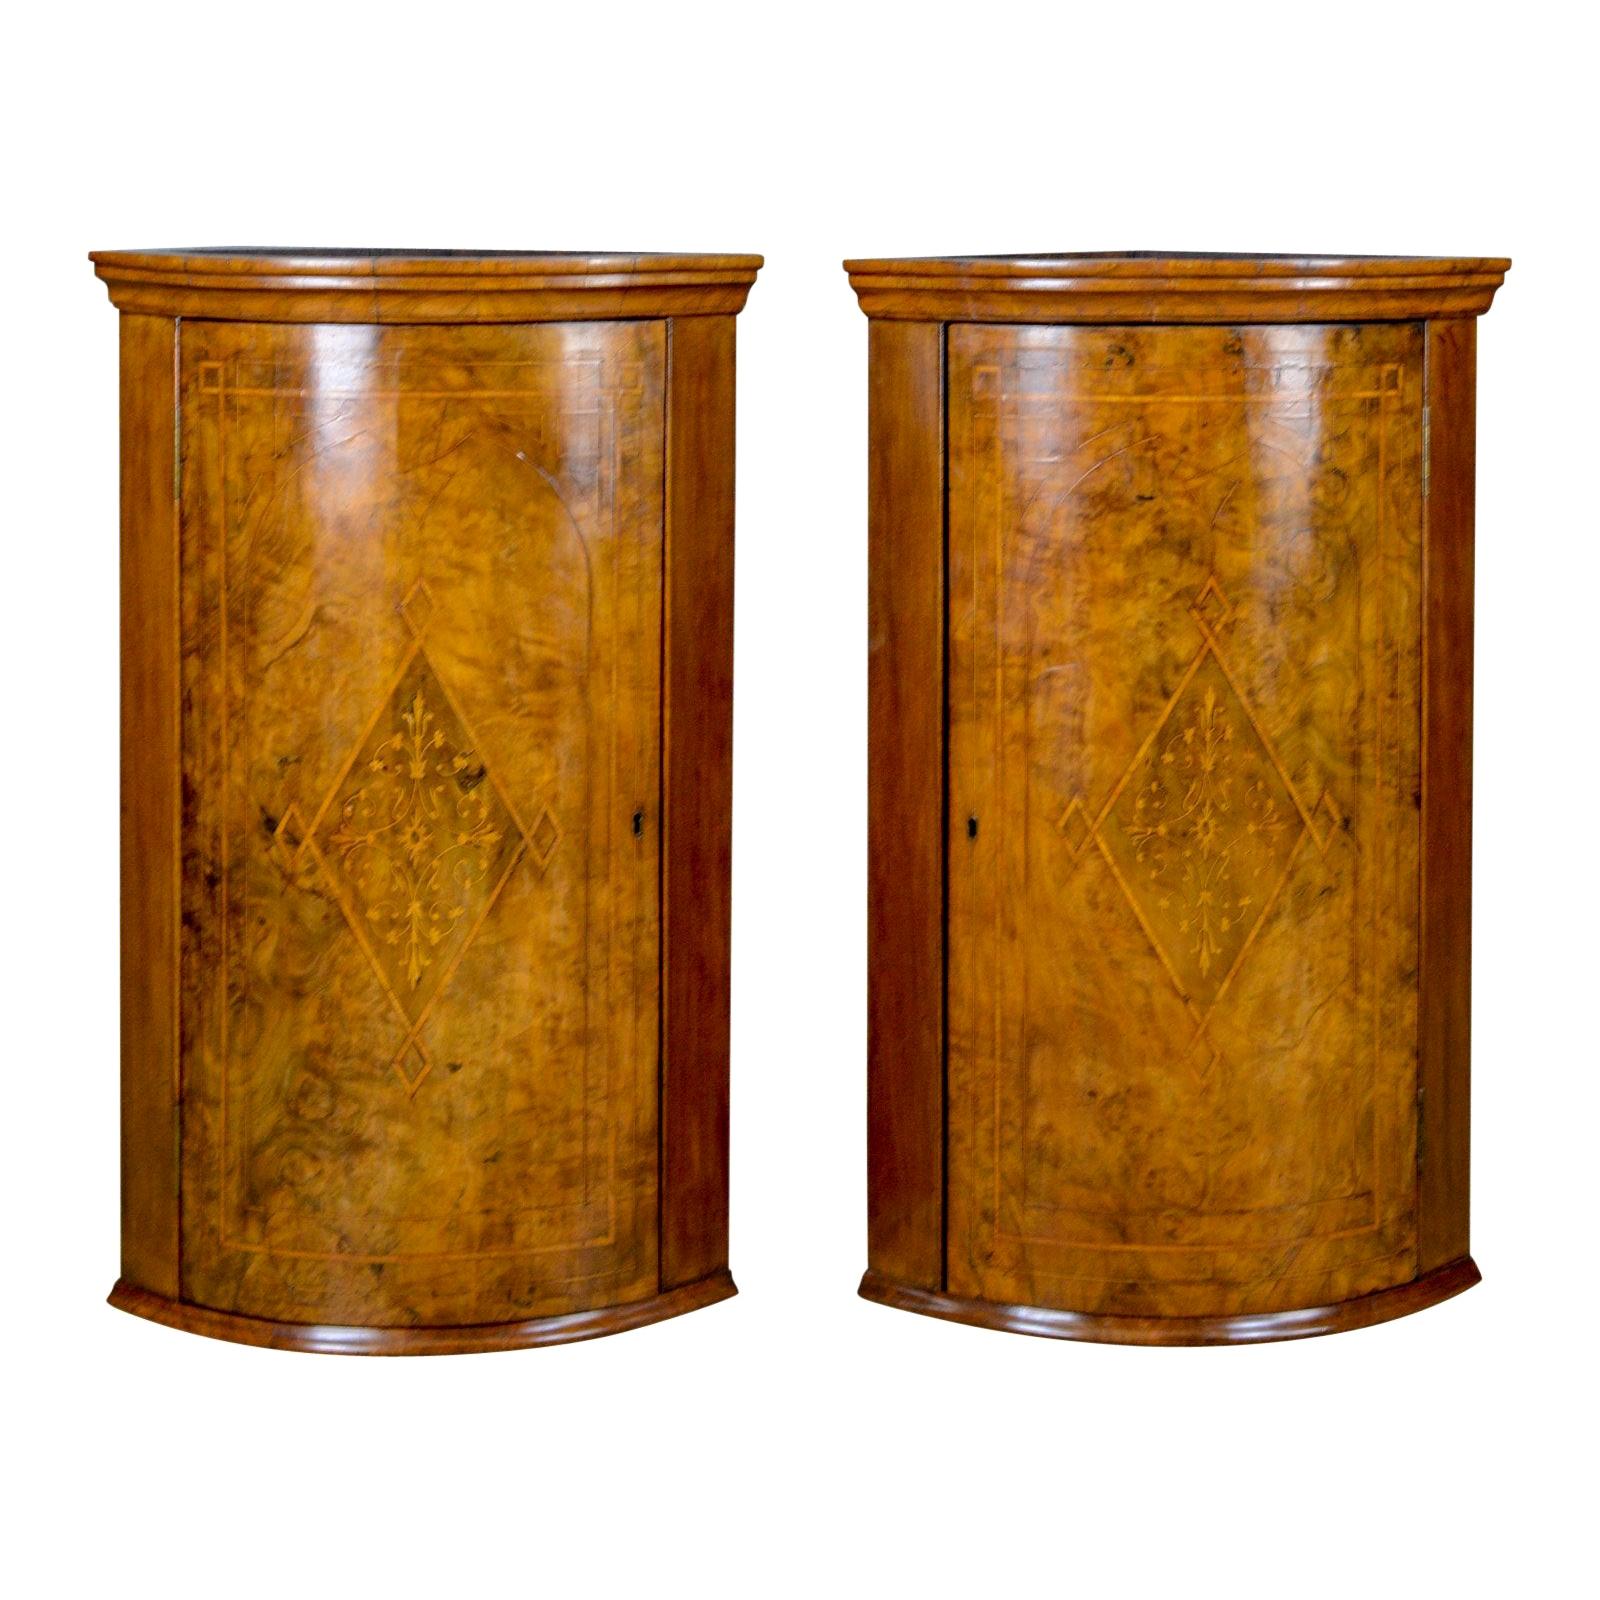 Antique Pair of Georgian Revival Corner Cabinets, English, Burr Walnut